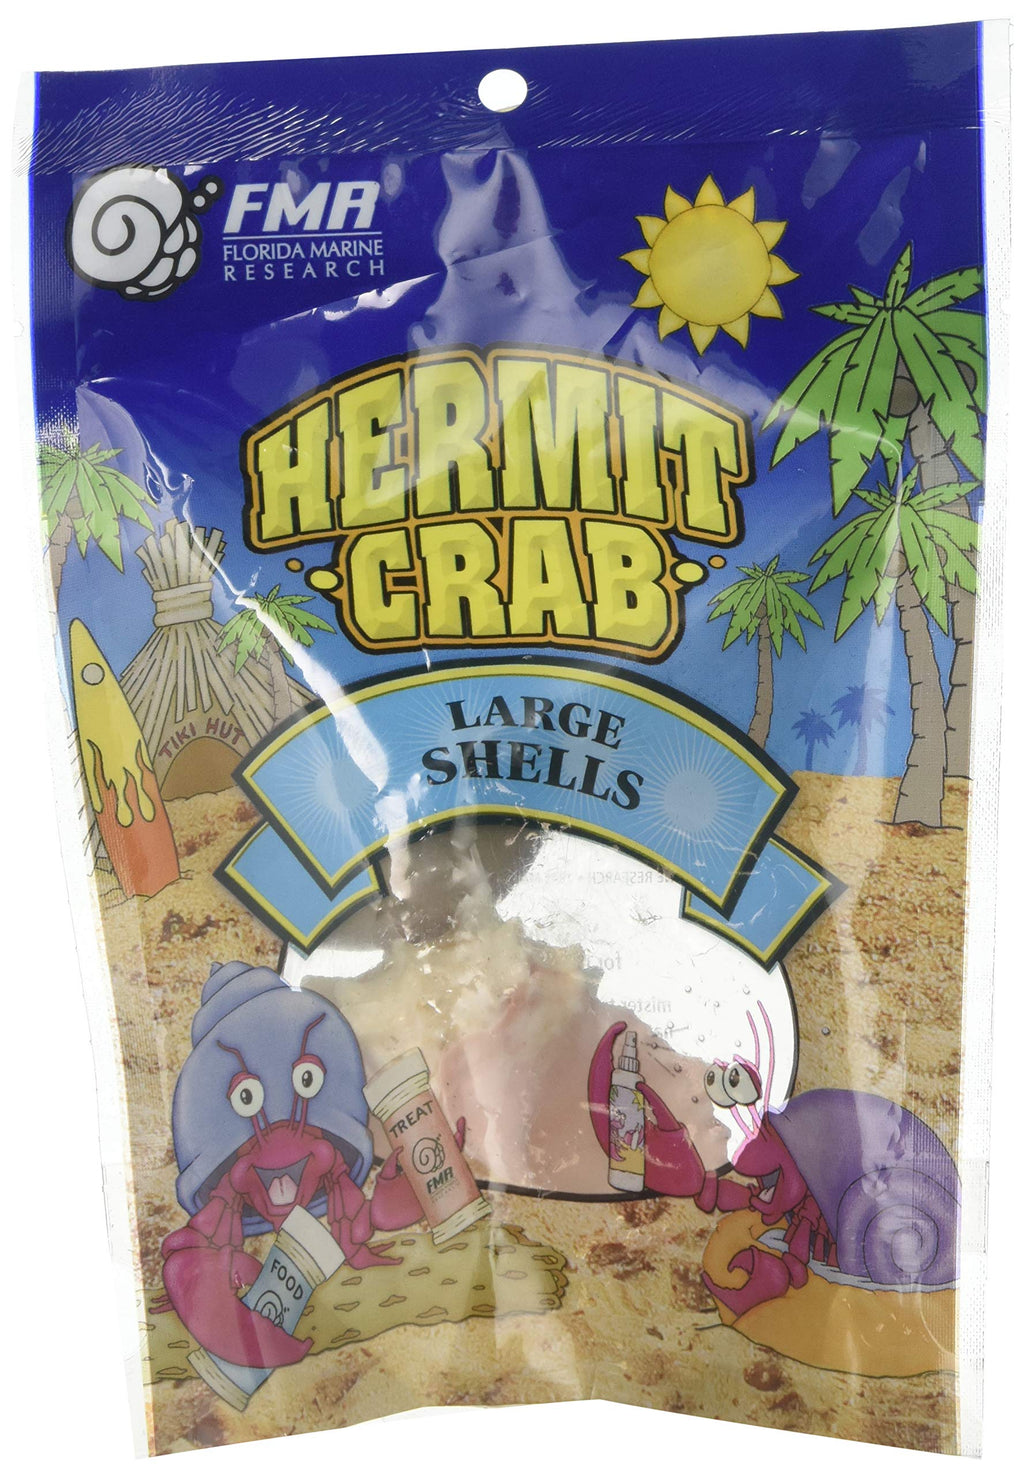 [Australia] - Florida Marine Research SFM33331 2-Pack Hermit Crab Shell, Large 